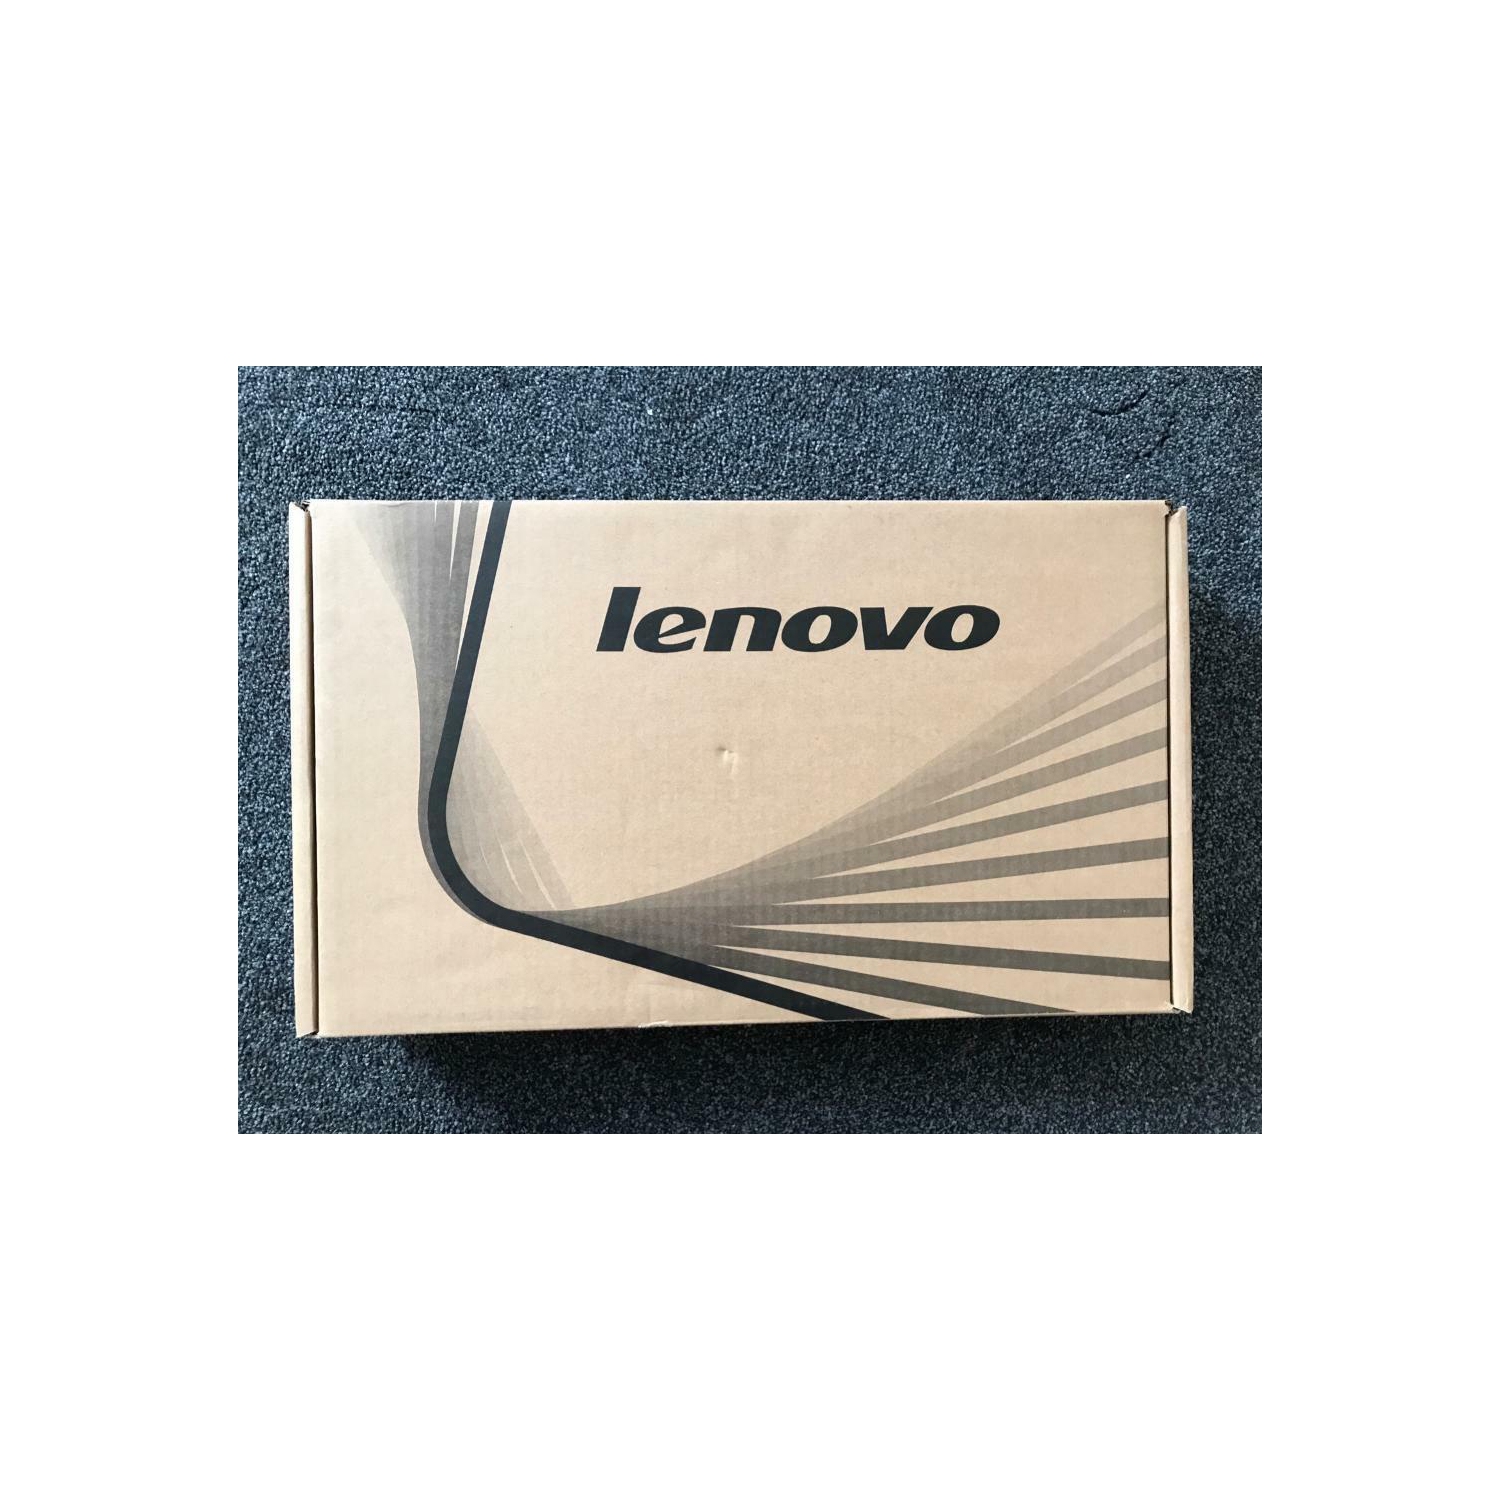 Lenovo ThinkPad C13 Yoga Chromebook Laptop - European French Keyboard - 13.3" FHD IPS Touch 300 nits - AMD Ryzen 5 3500C - 2.1GHZ - AMD Radeon Graphics - 8GB RAM - 128GB SSD - Brand New Sealed Box